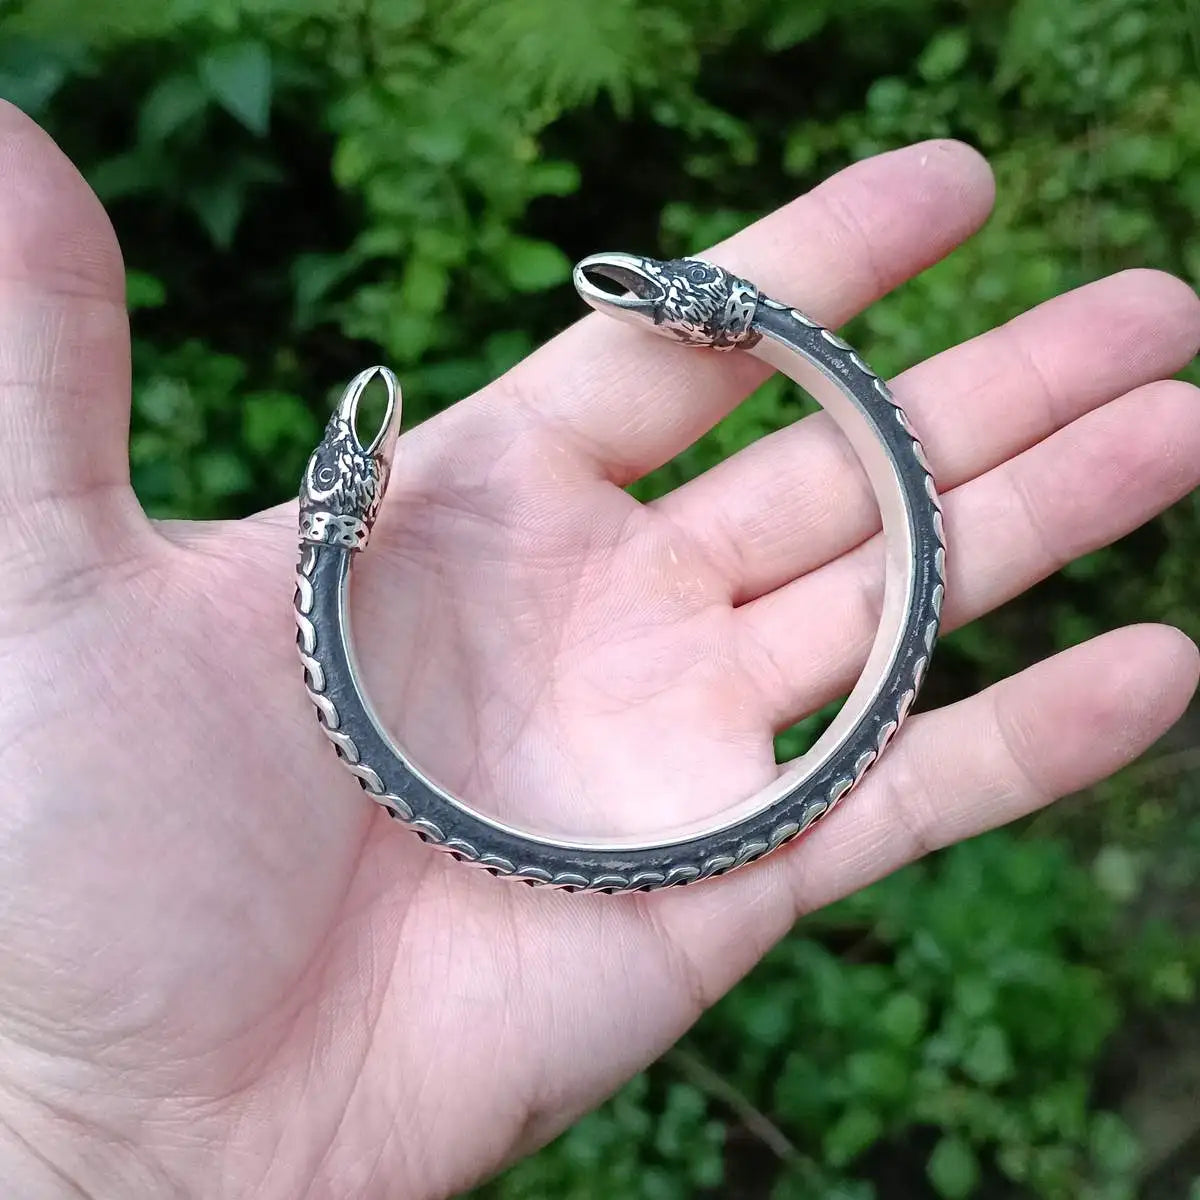 Viking raven arm ring bracelet from Silver